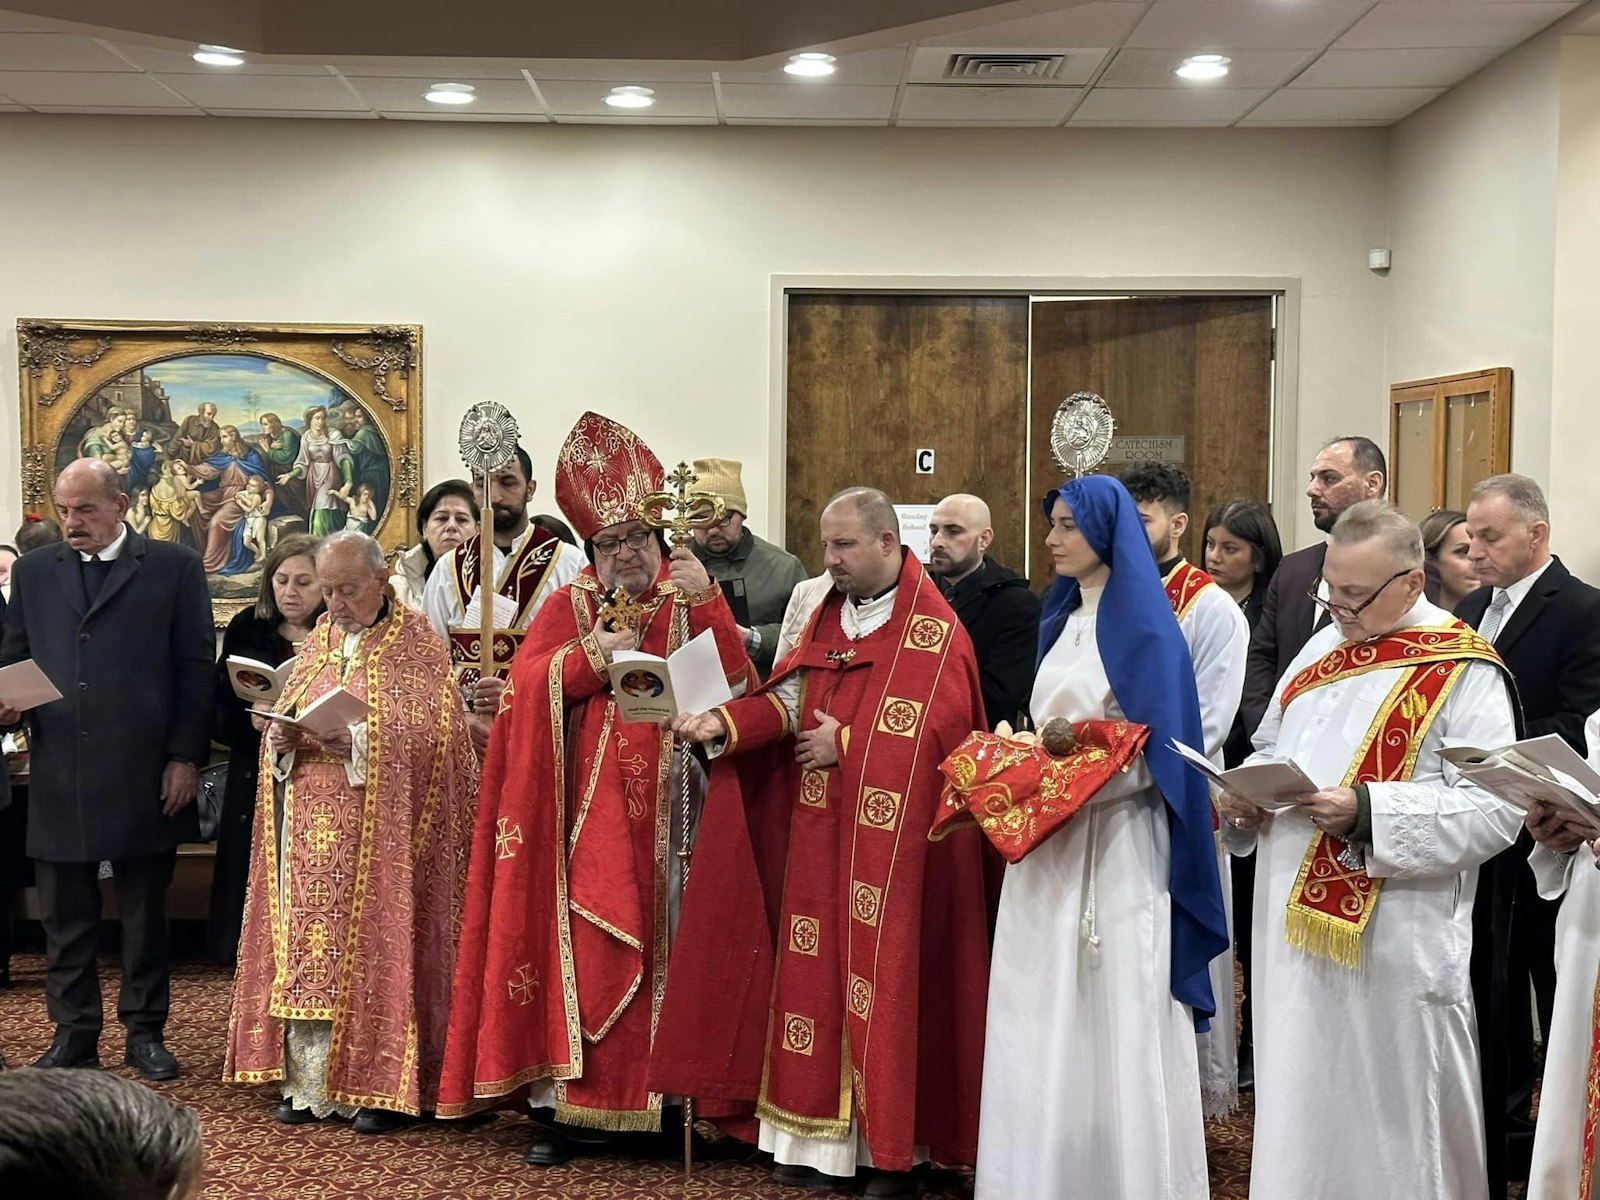 Bishop Habash celebrates a Christmas liturgy at St. Toma Syriac Cathedral in Farmington Hills. (Courtesy of St. Toma Syriac Catholic Cathedral)